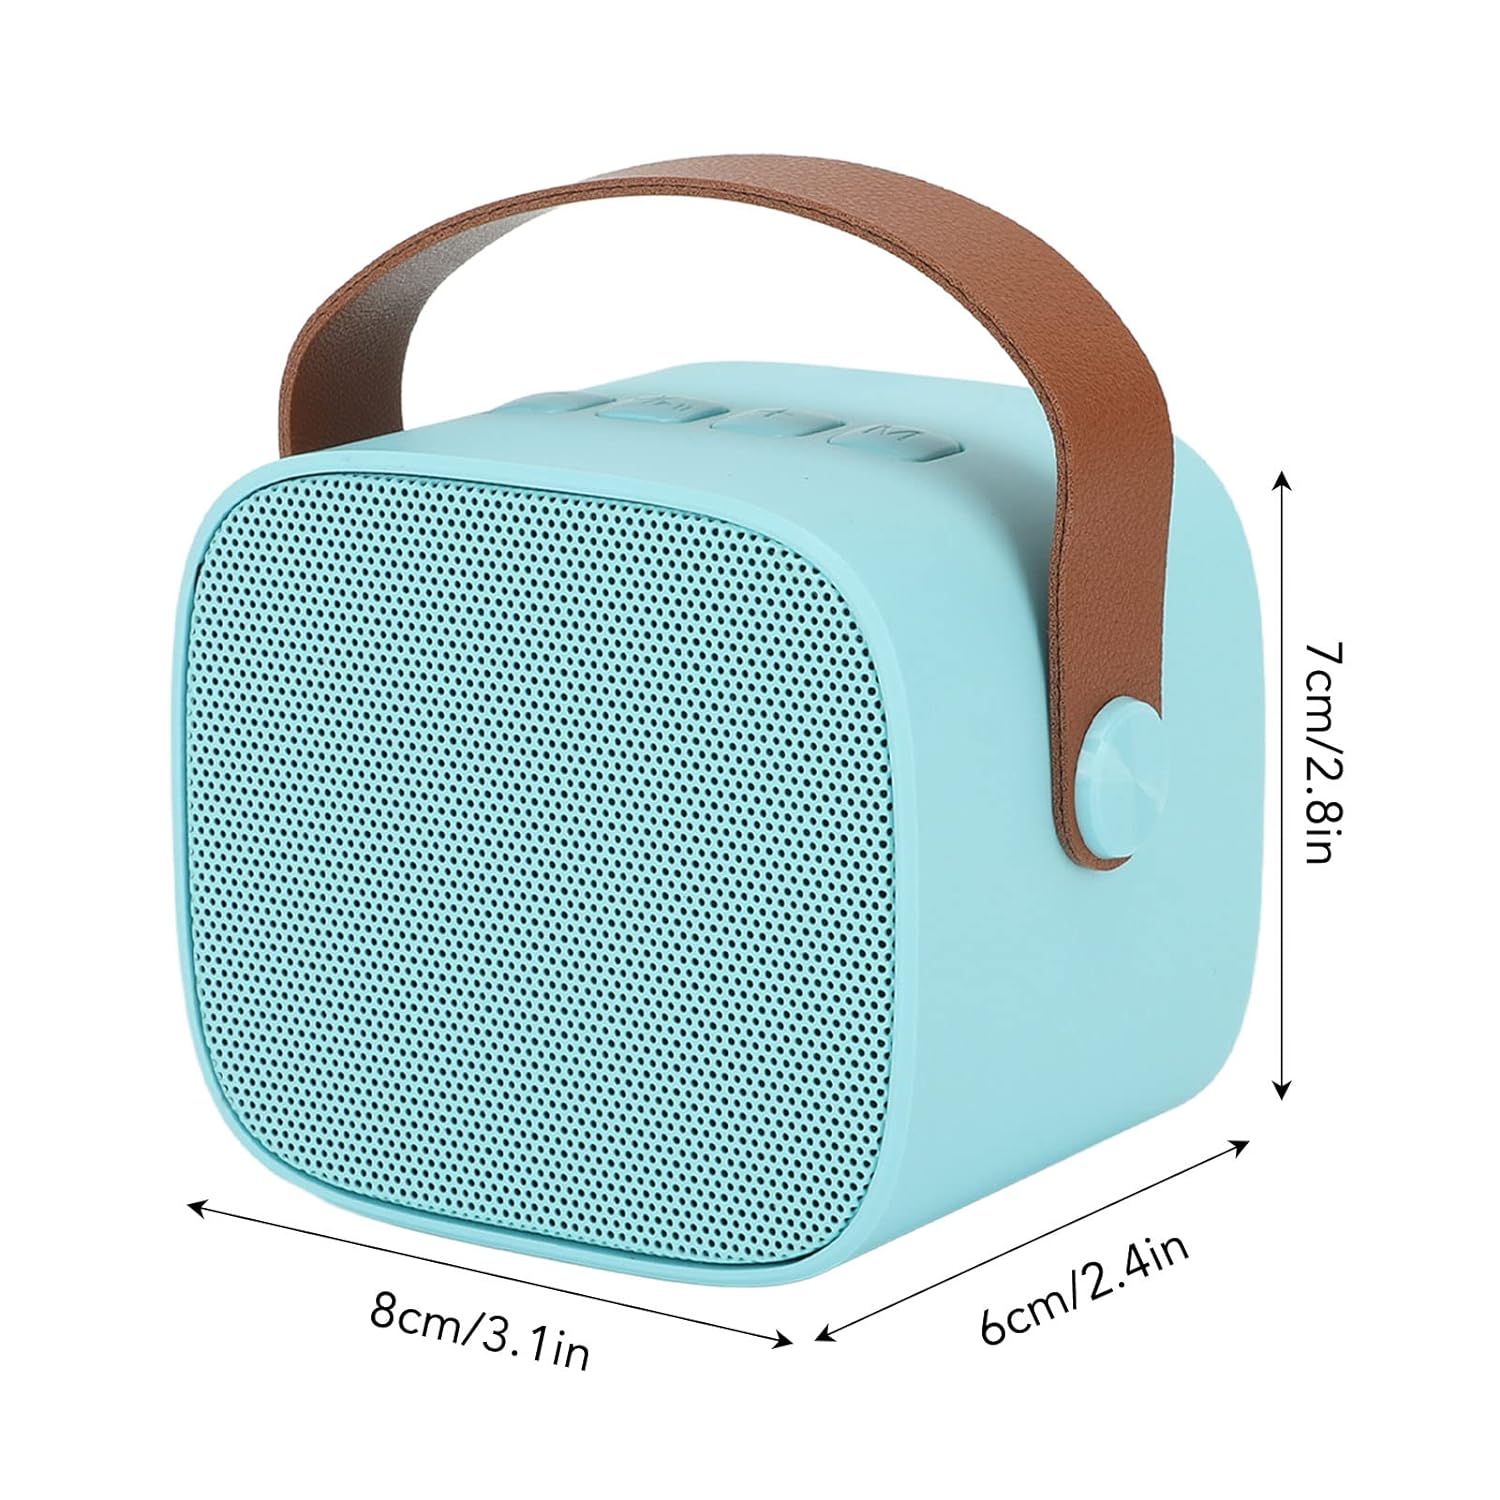 Mini Karaoke Machine, Stable Transmission Kids Portable Bluetooth Speaker Machine for Speech (Blue)